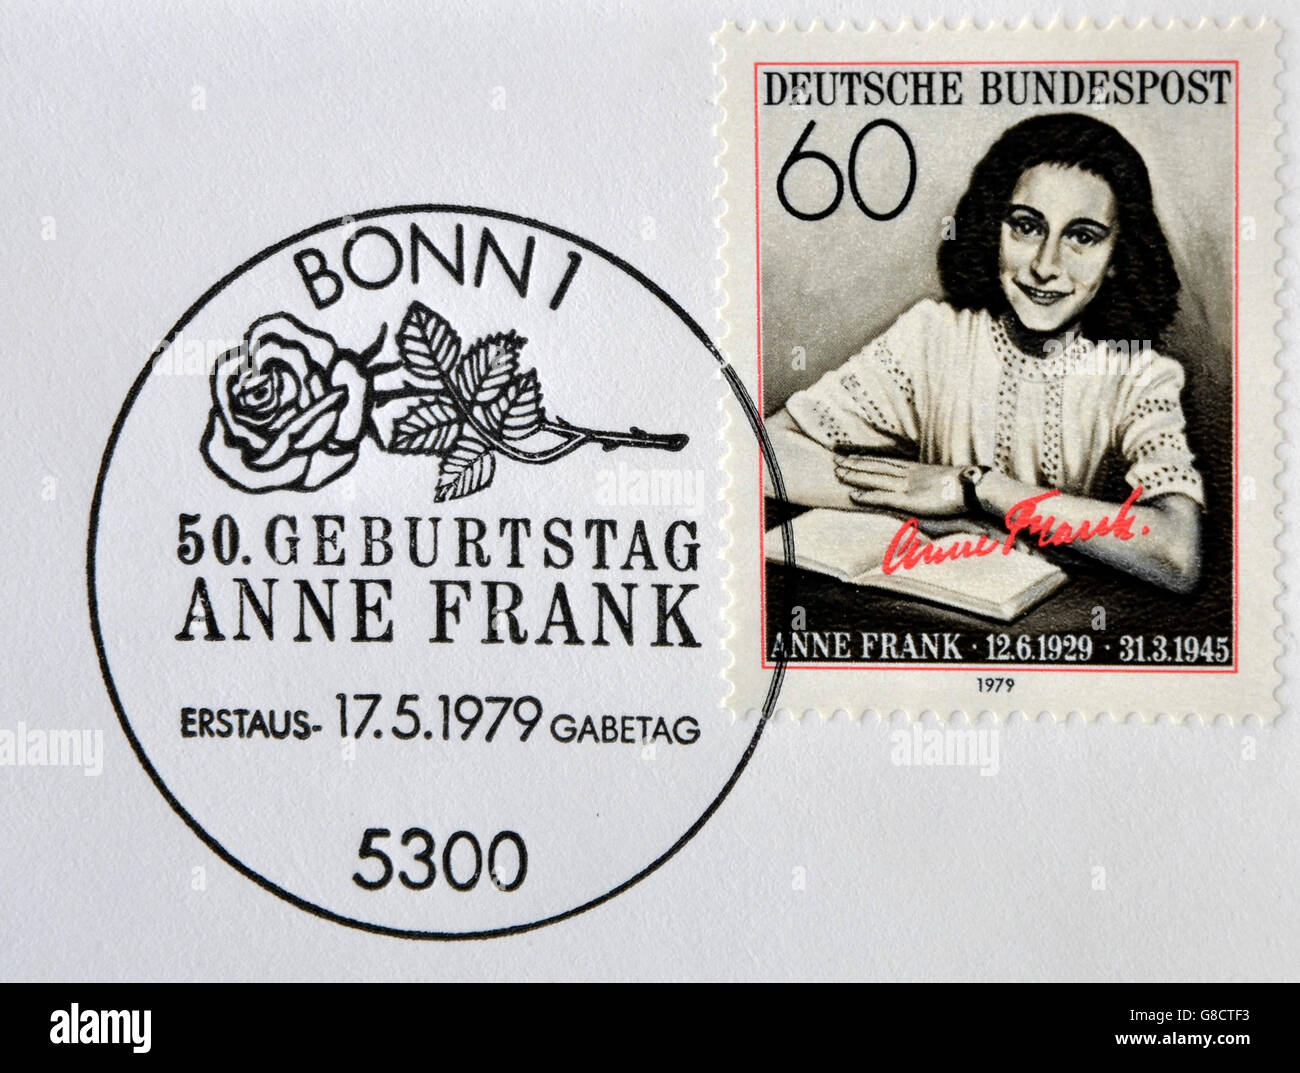 GERMANY- CIRCA 1979: stamp printed by Germany, shows Anne Frank, Nazi victim, circa 1979. Stock Photo